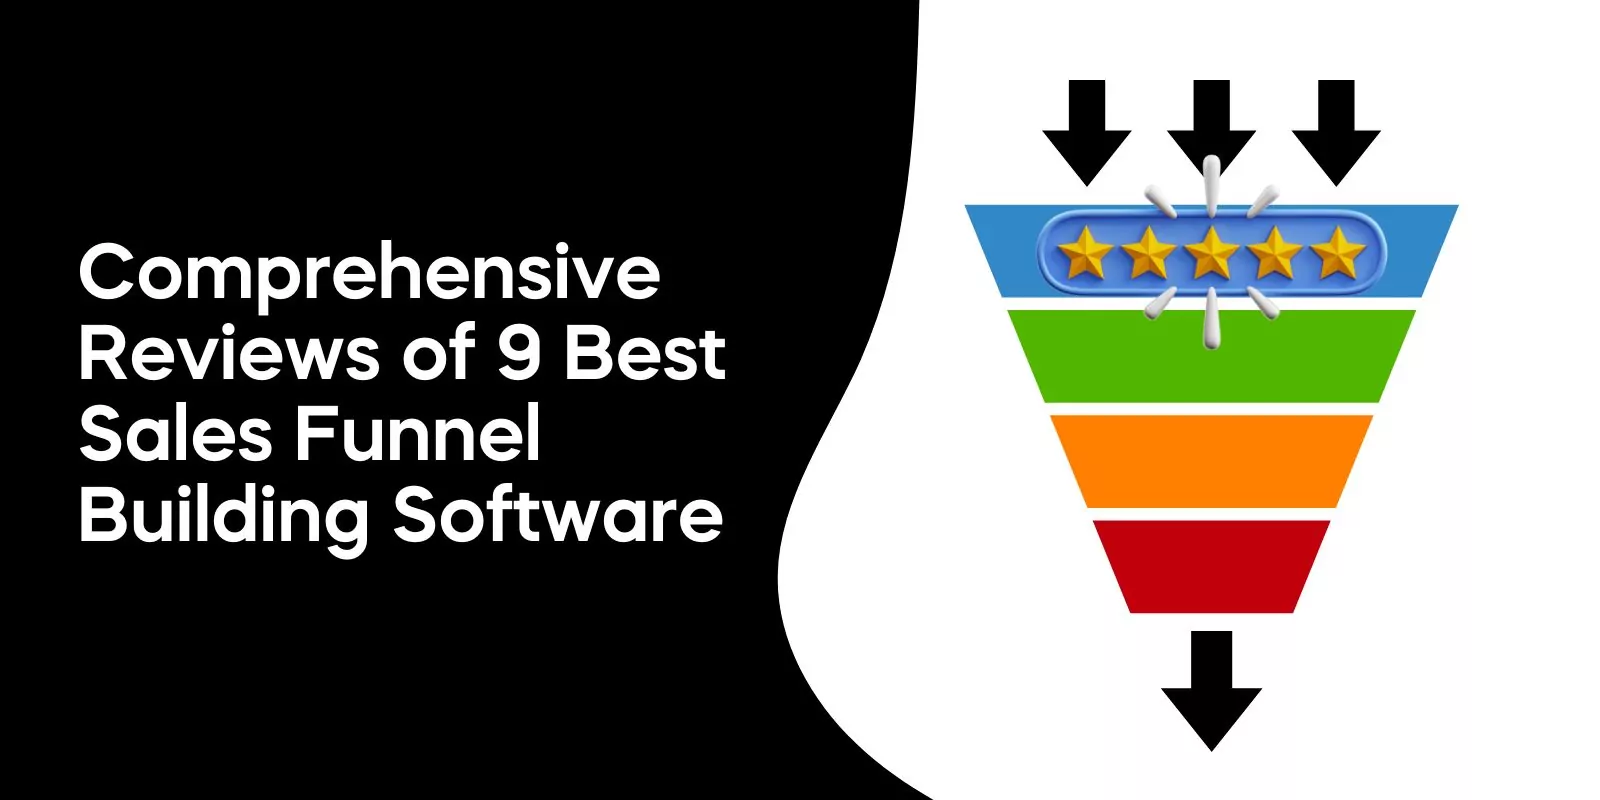 Comprehensive Reviews of 9 Best Sales Funnel Building Software